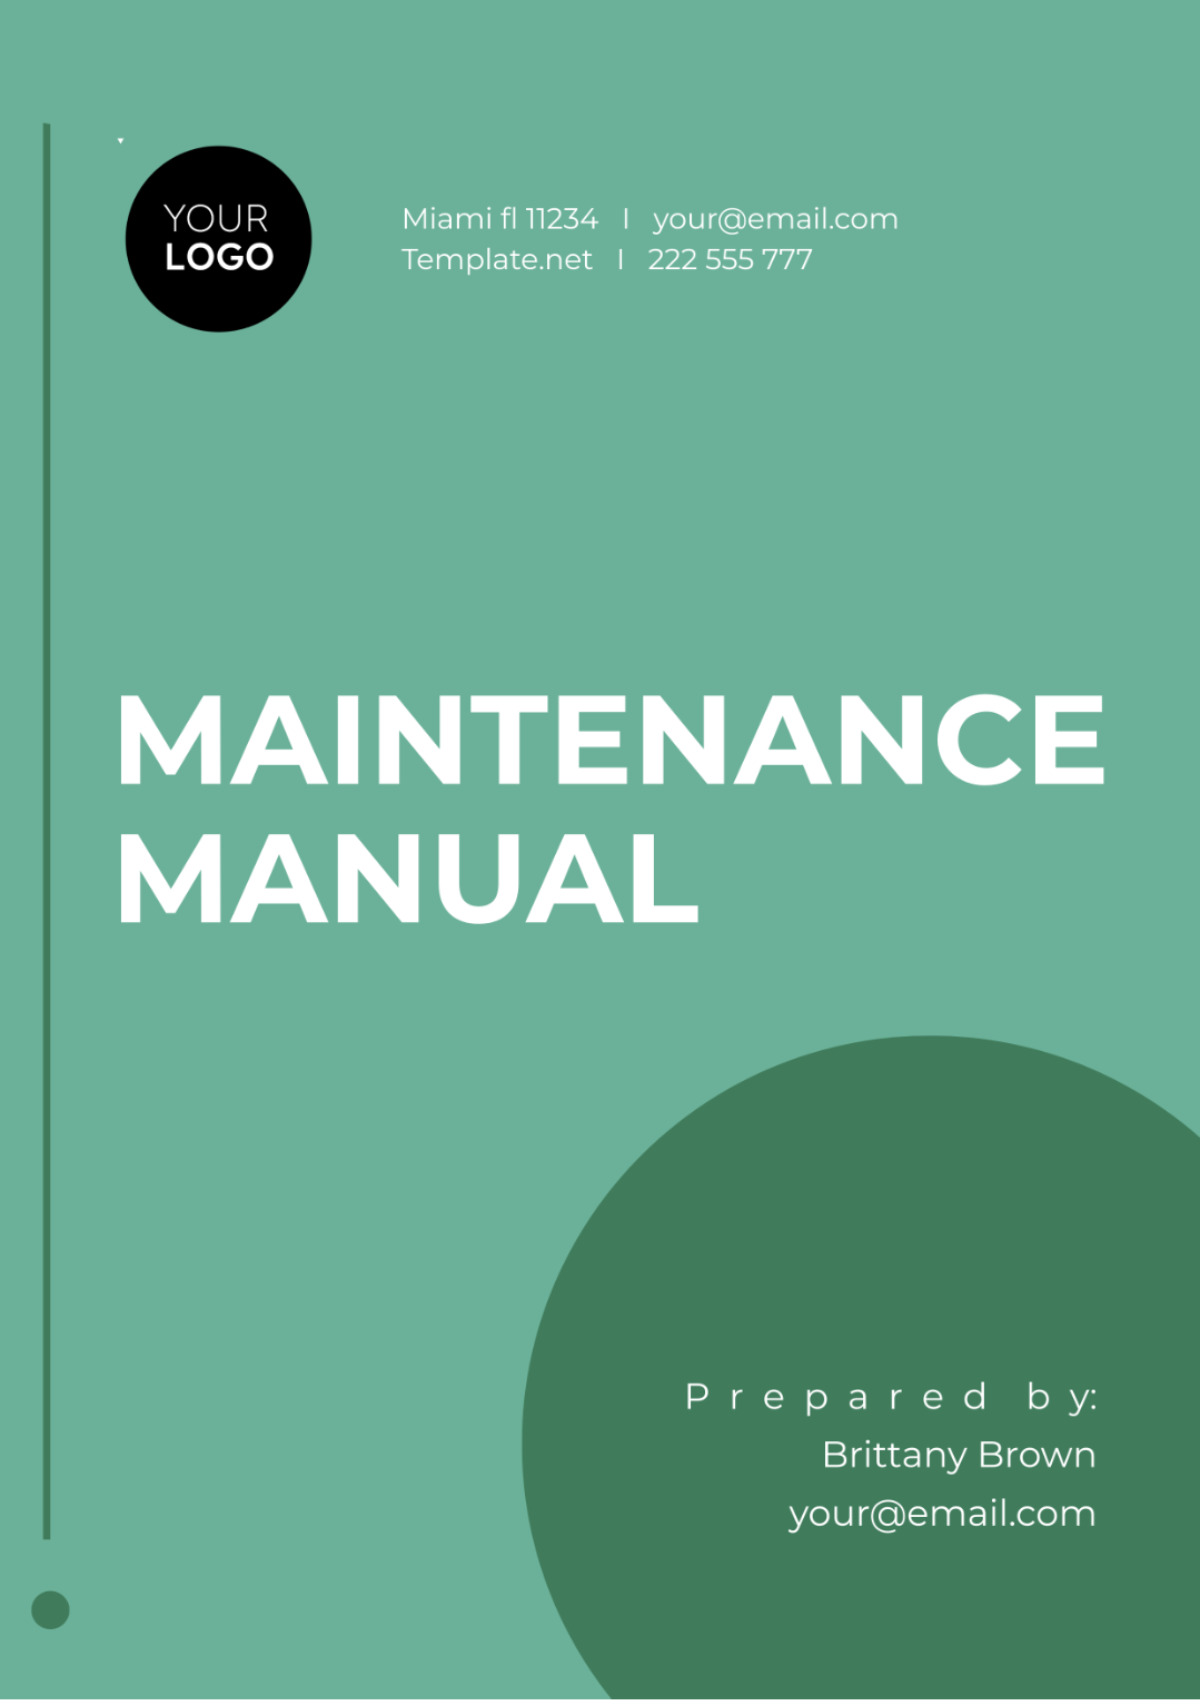 Free Maintenance Manual Template